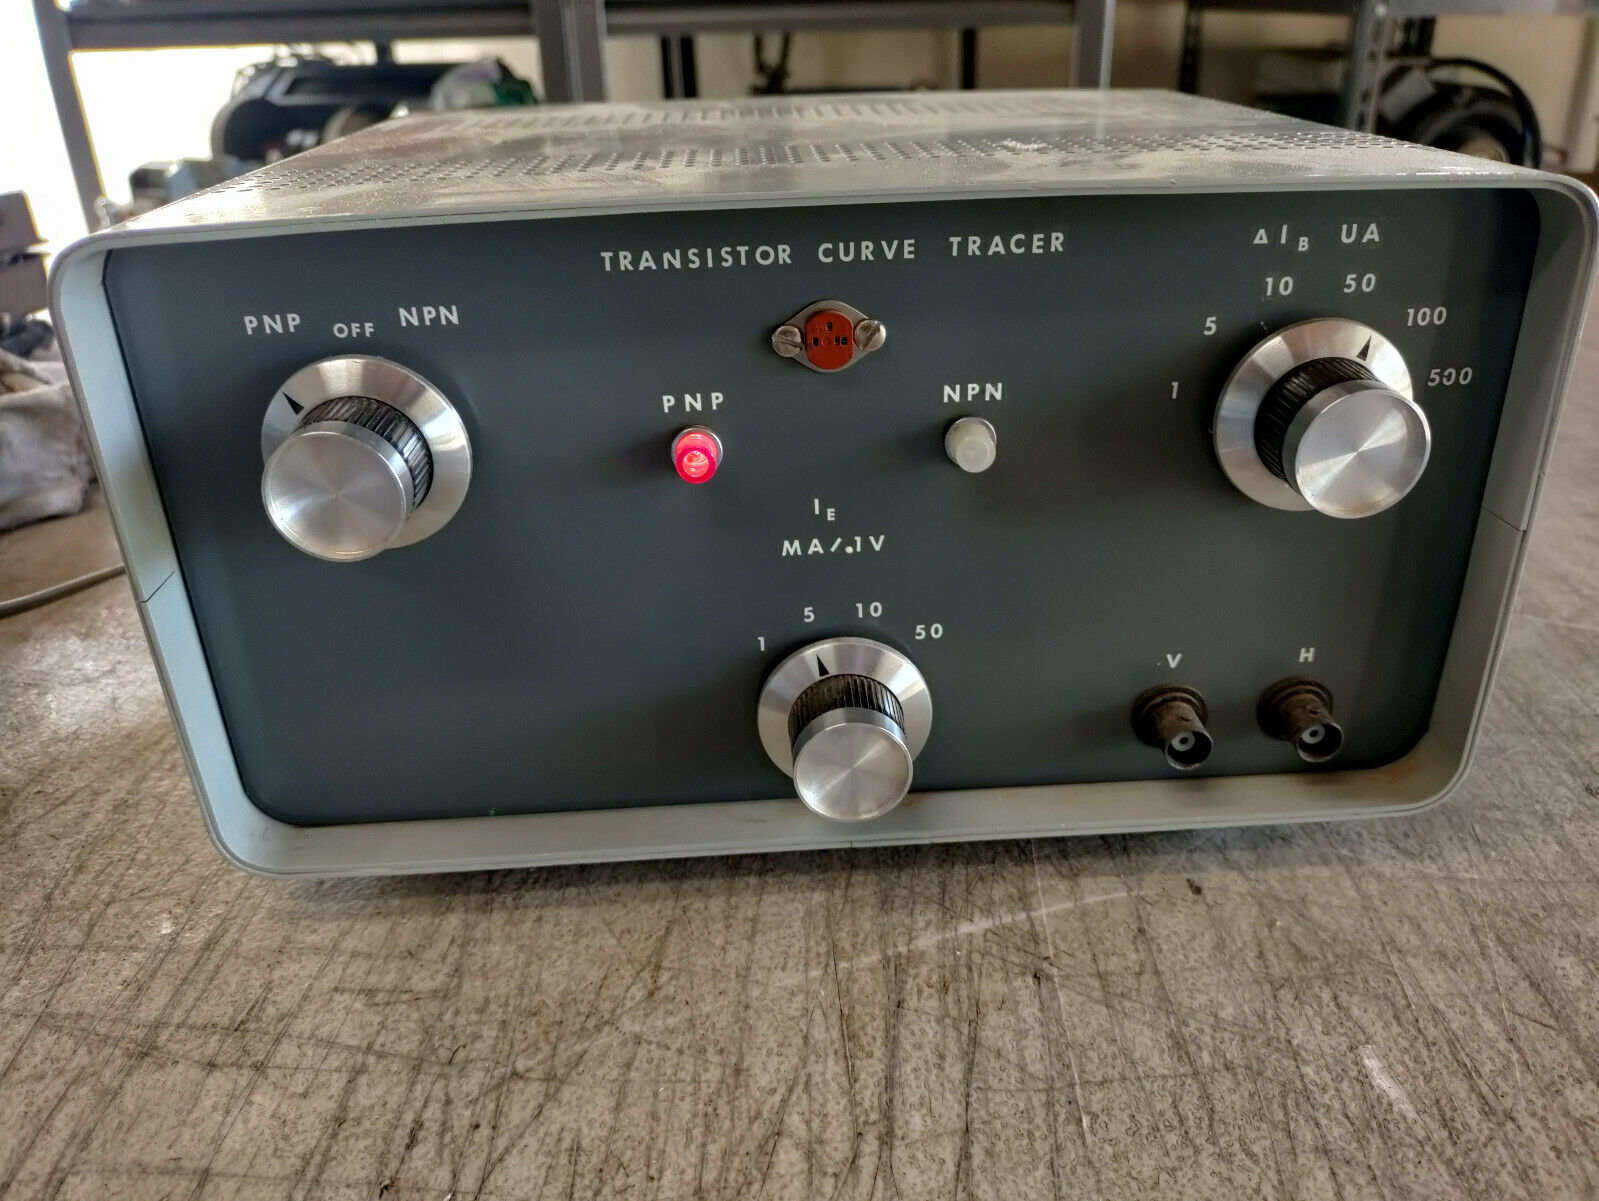 Vintage Transistor Curve Tracer Ham Radio